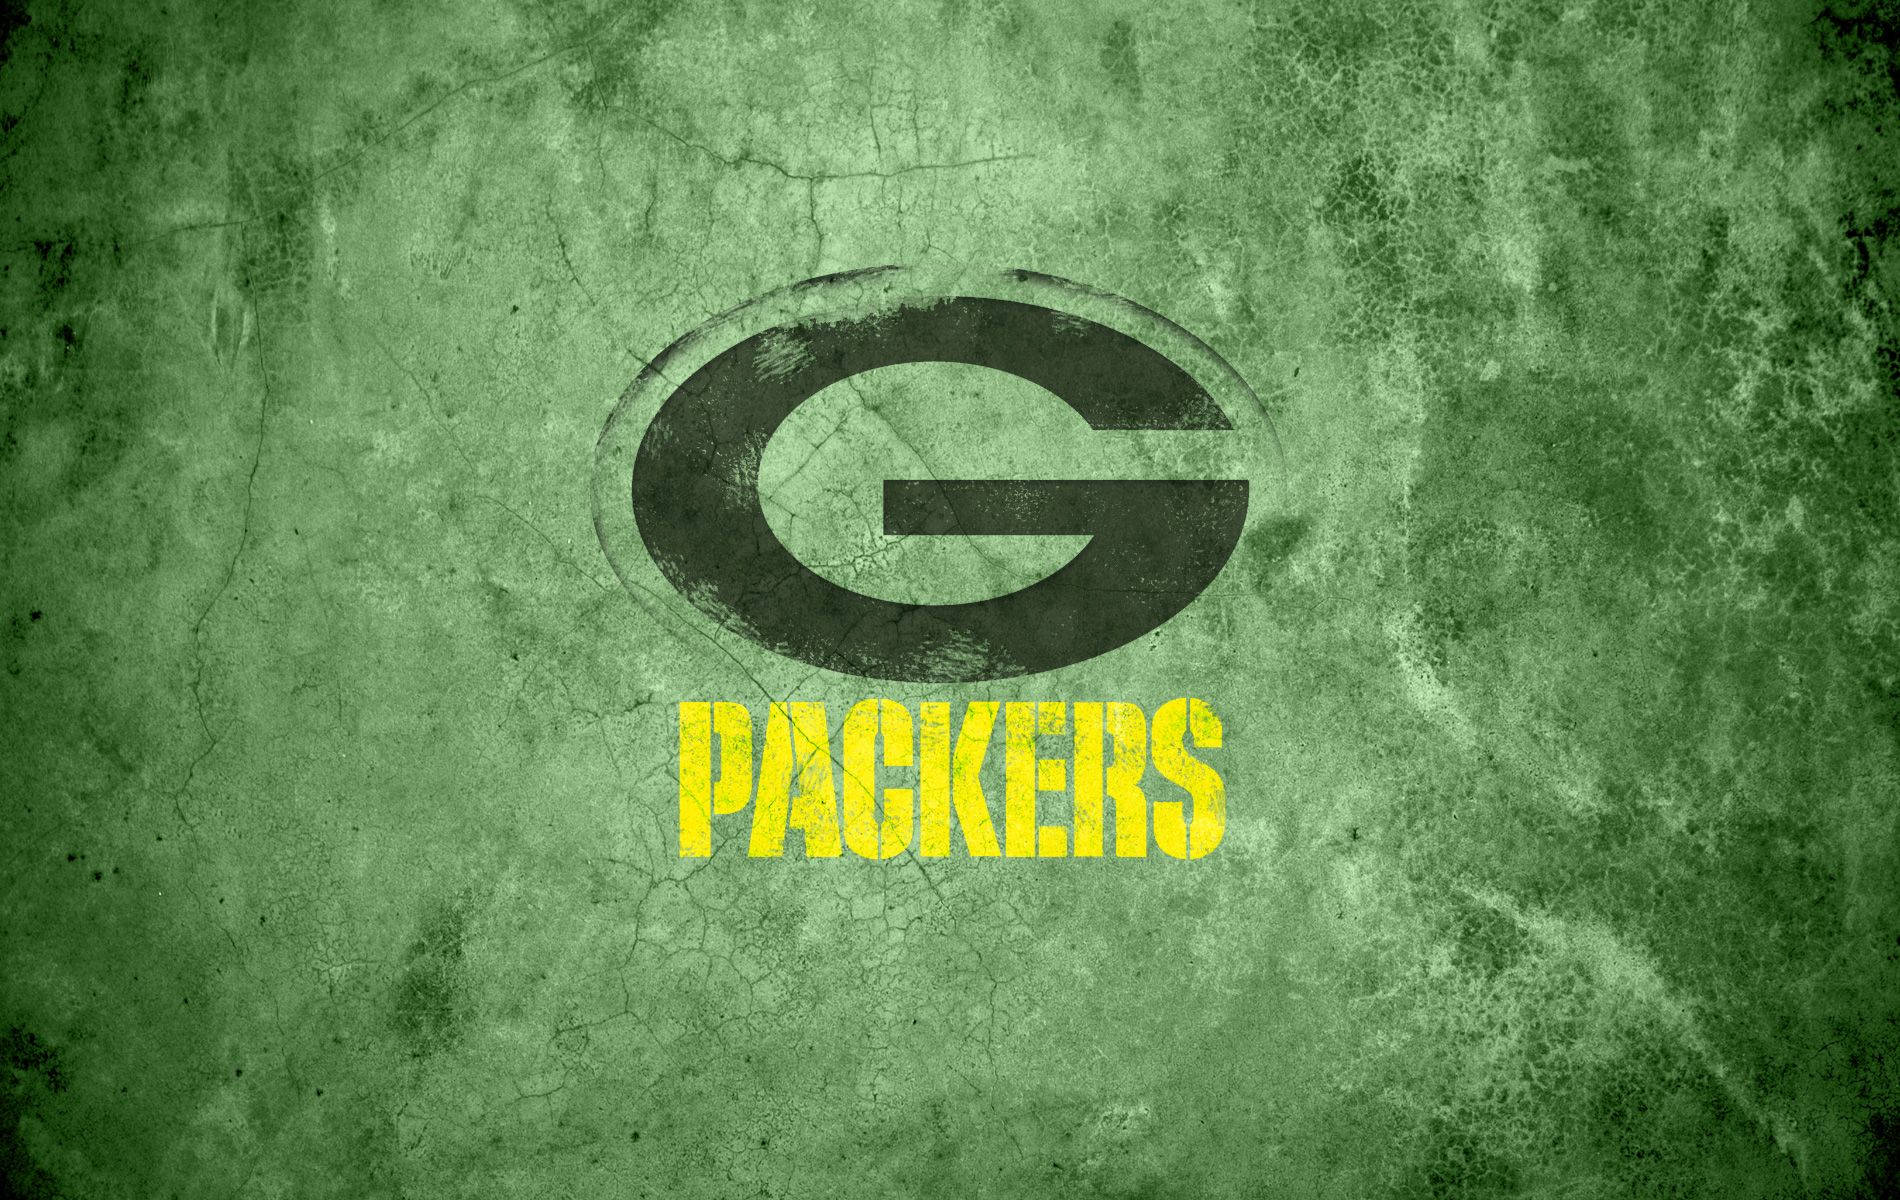 Champions Green Bay Packers Logo